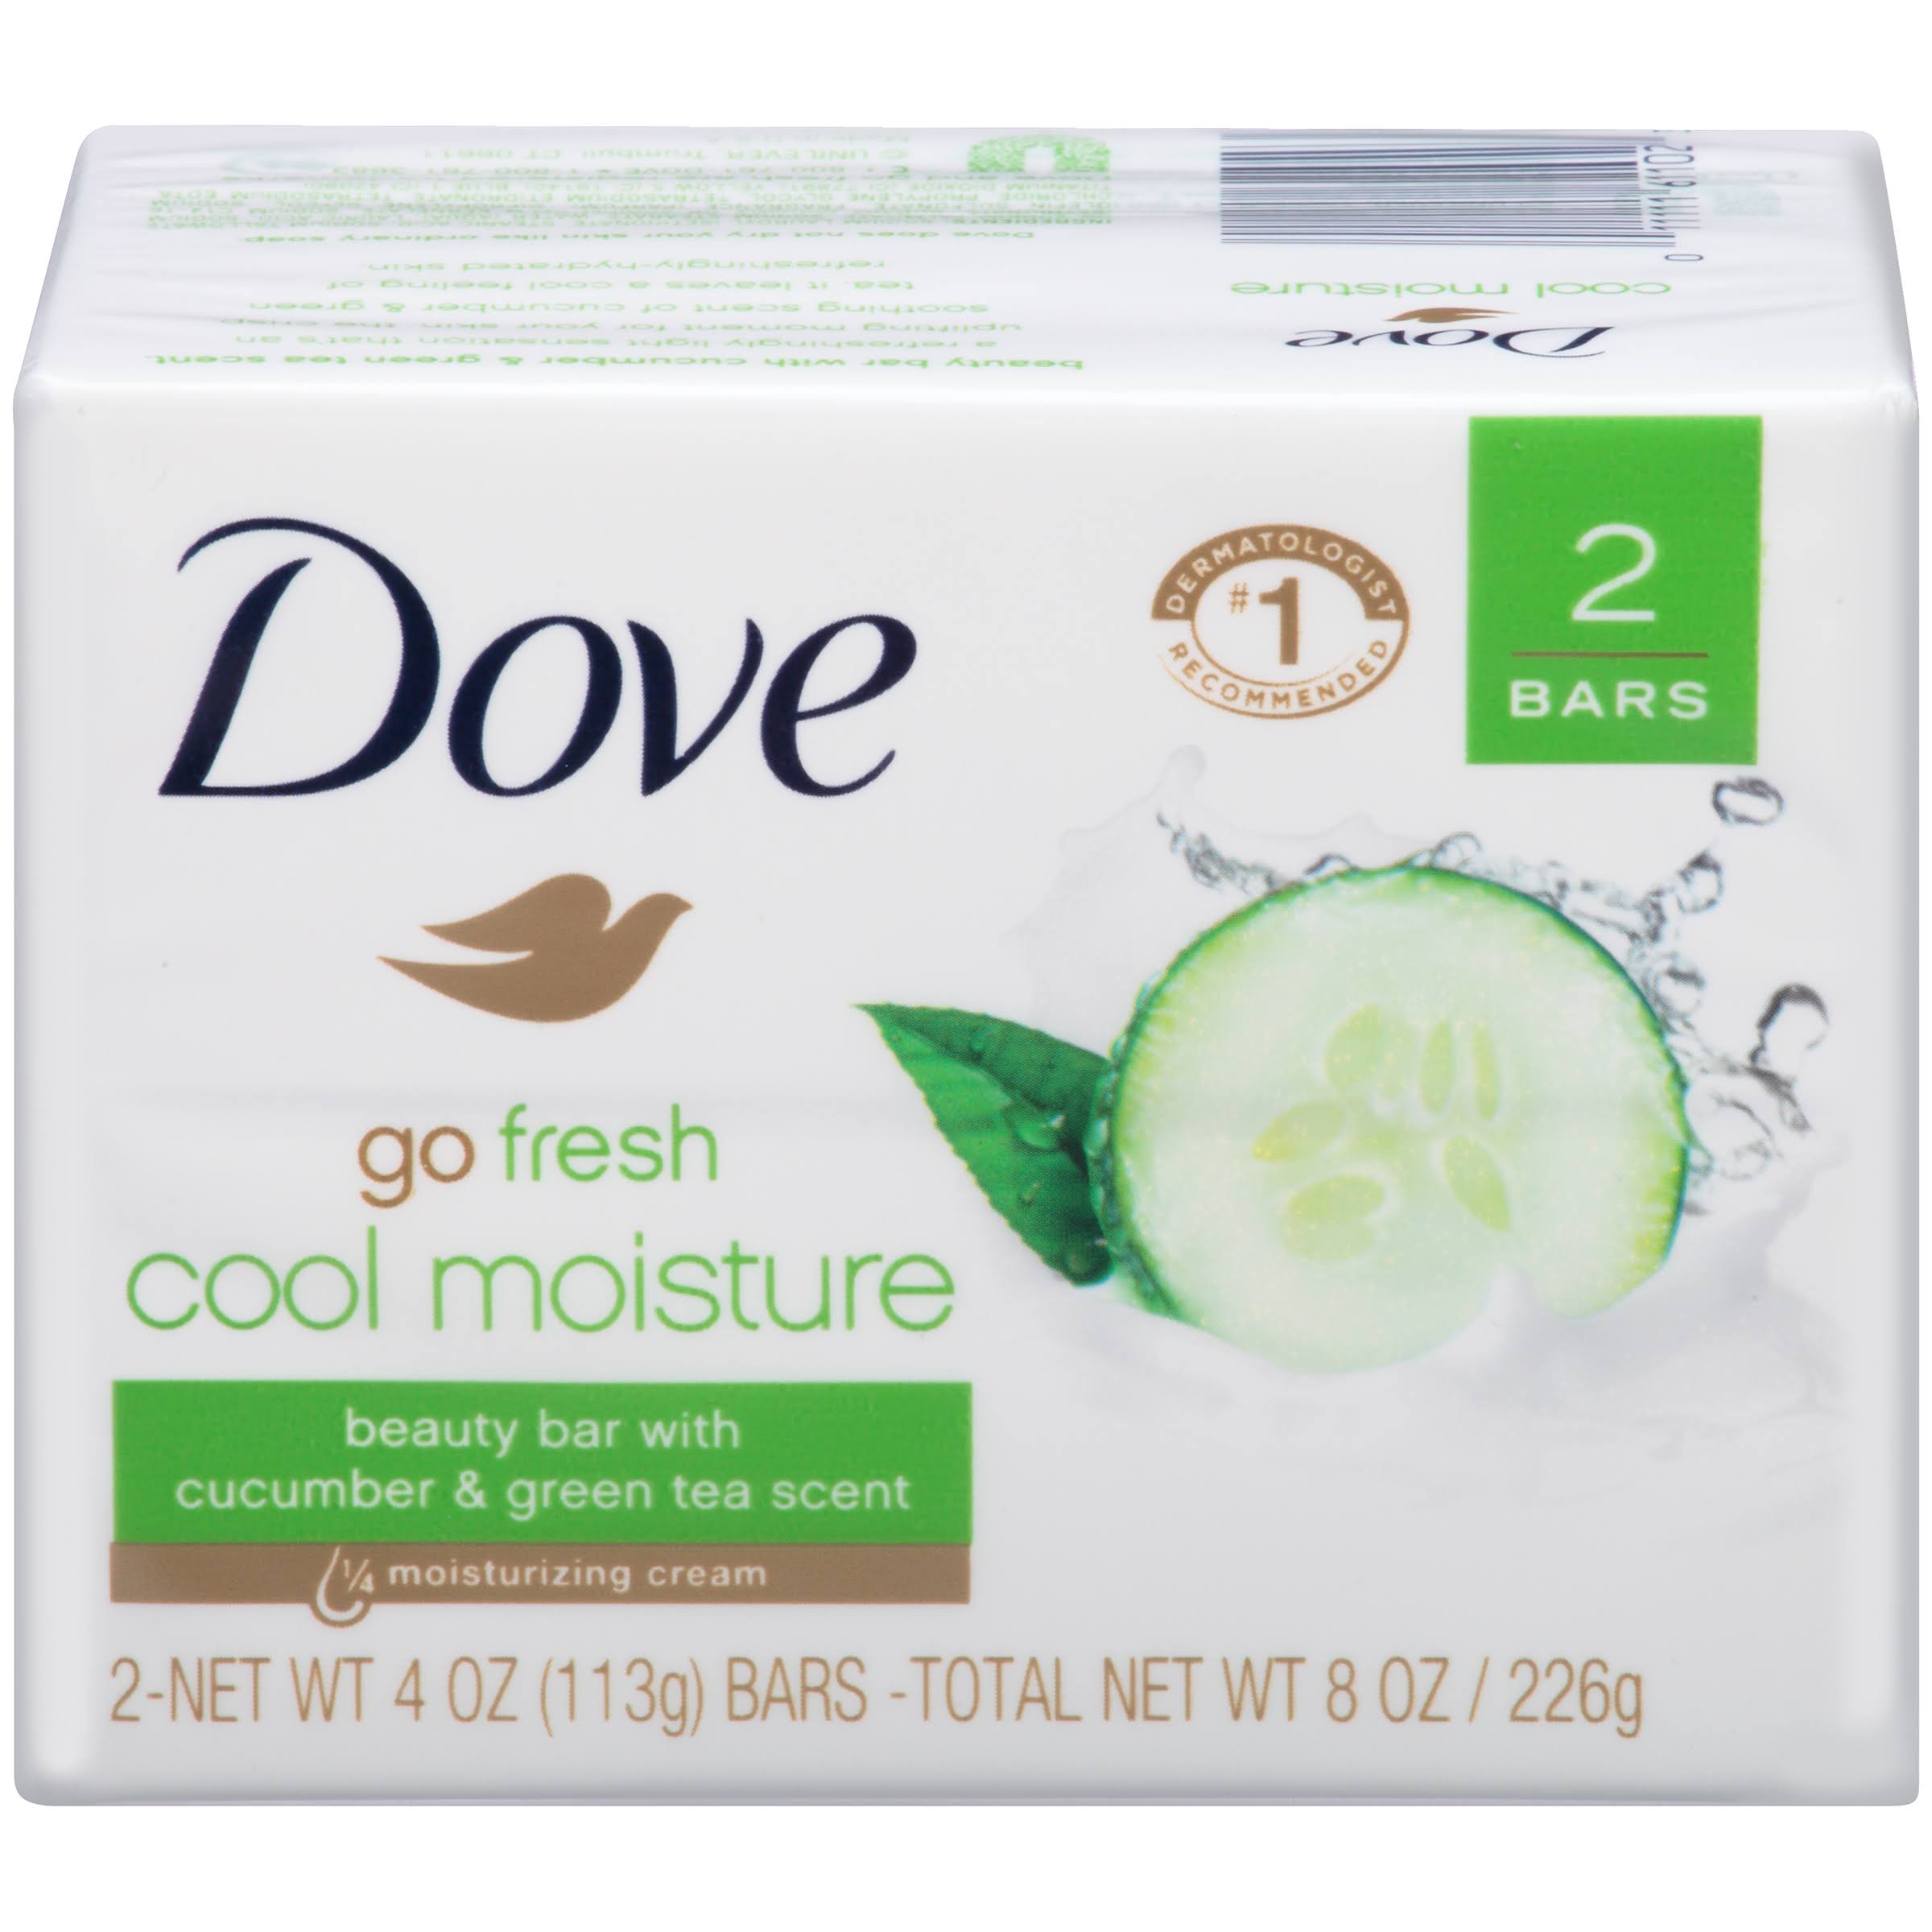 Dove Go Fresh Cool Moisture Beauty Bar - 4oz, 2ct, Cucumber and Green Tea Scent